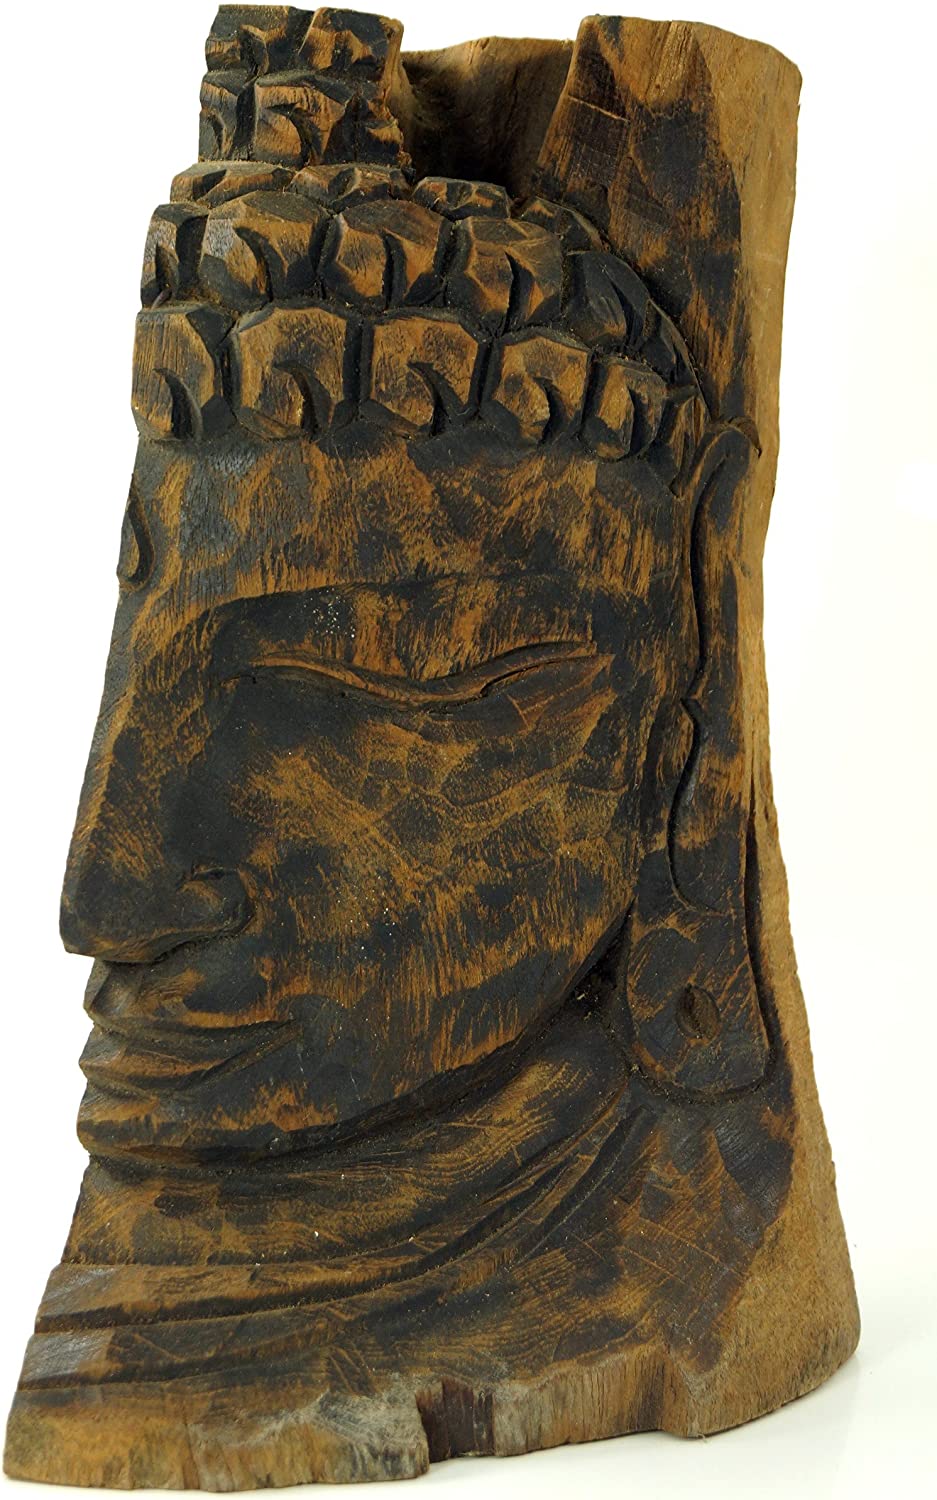 Guru-Shop Buddha Figurine, Carved Directly From The Trunk, Design 1, Brown, 32 x 16 x 17 cm